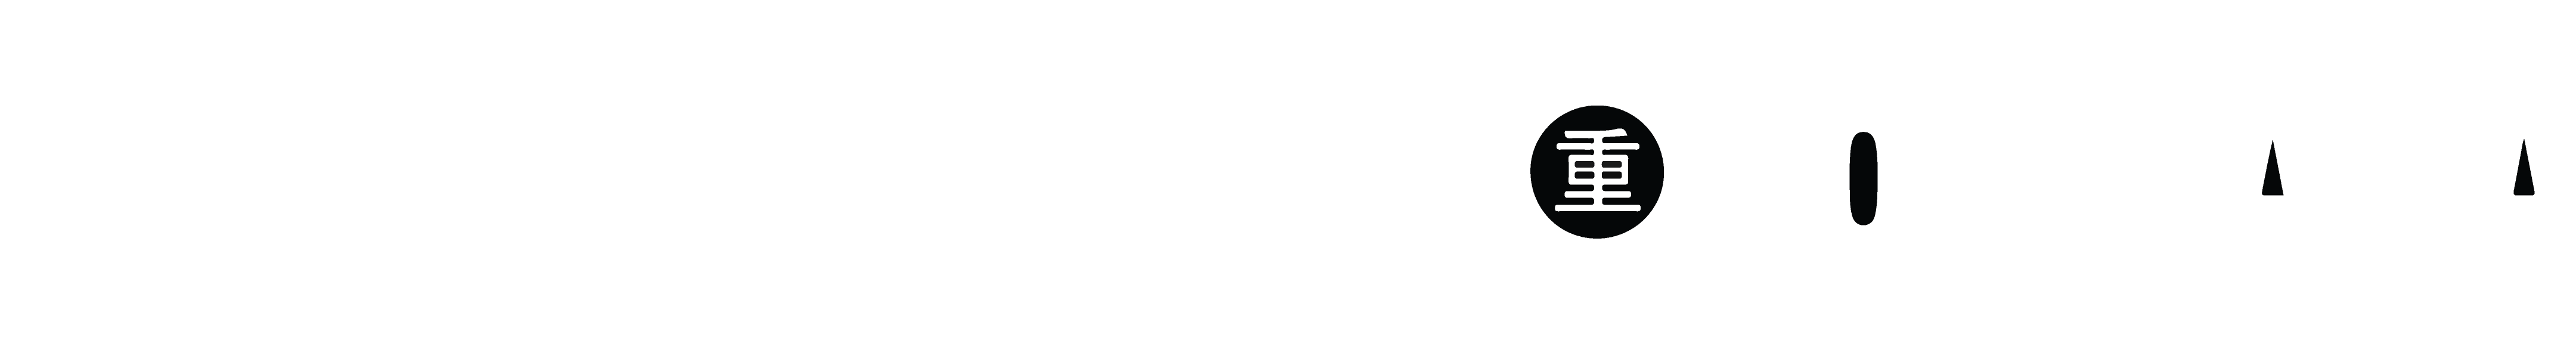 MY - Home Page - Sponsorship footer - sponsor logo - MARS